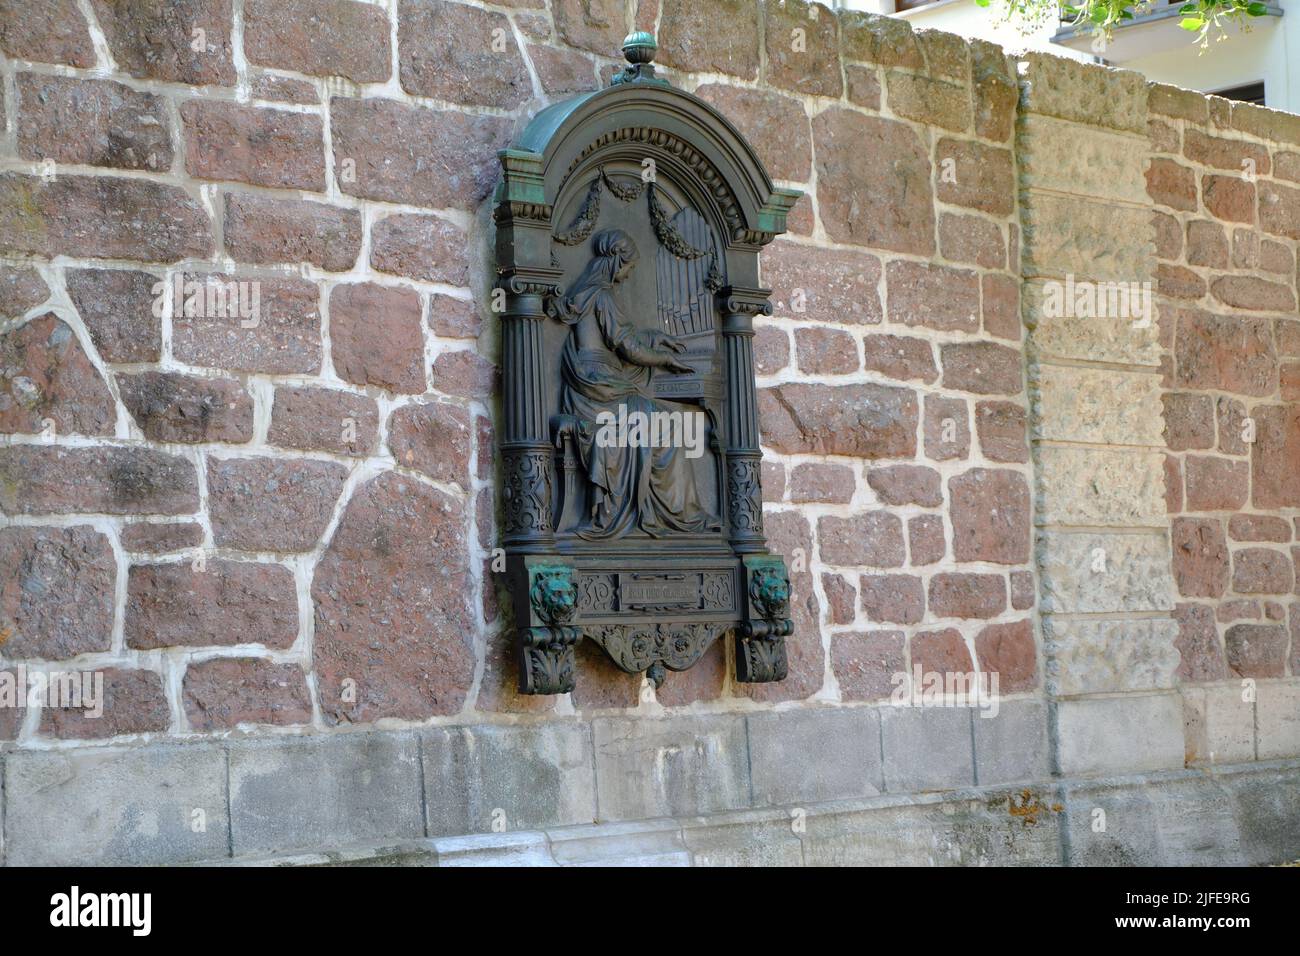 Bach Monument memorial to Saint Cecilia, patron Siat of Church Music. Stock Photo